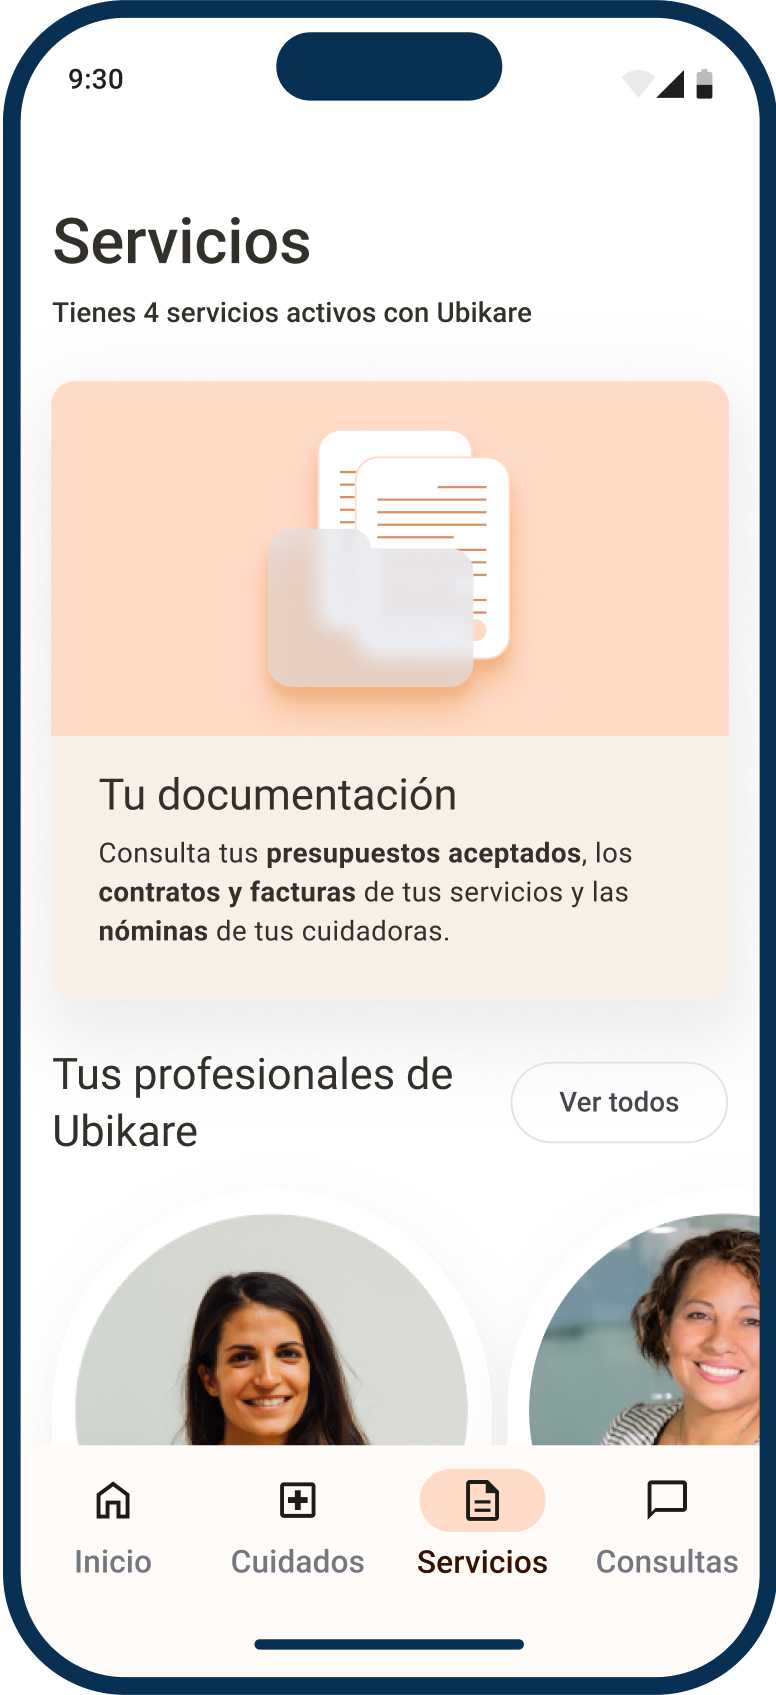 Ubikare app, Services plan showing Ubikare list of professionals